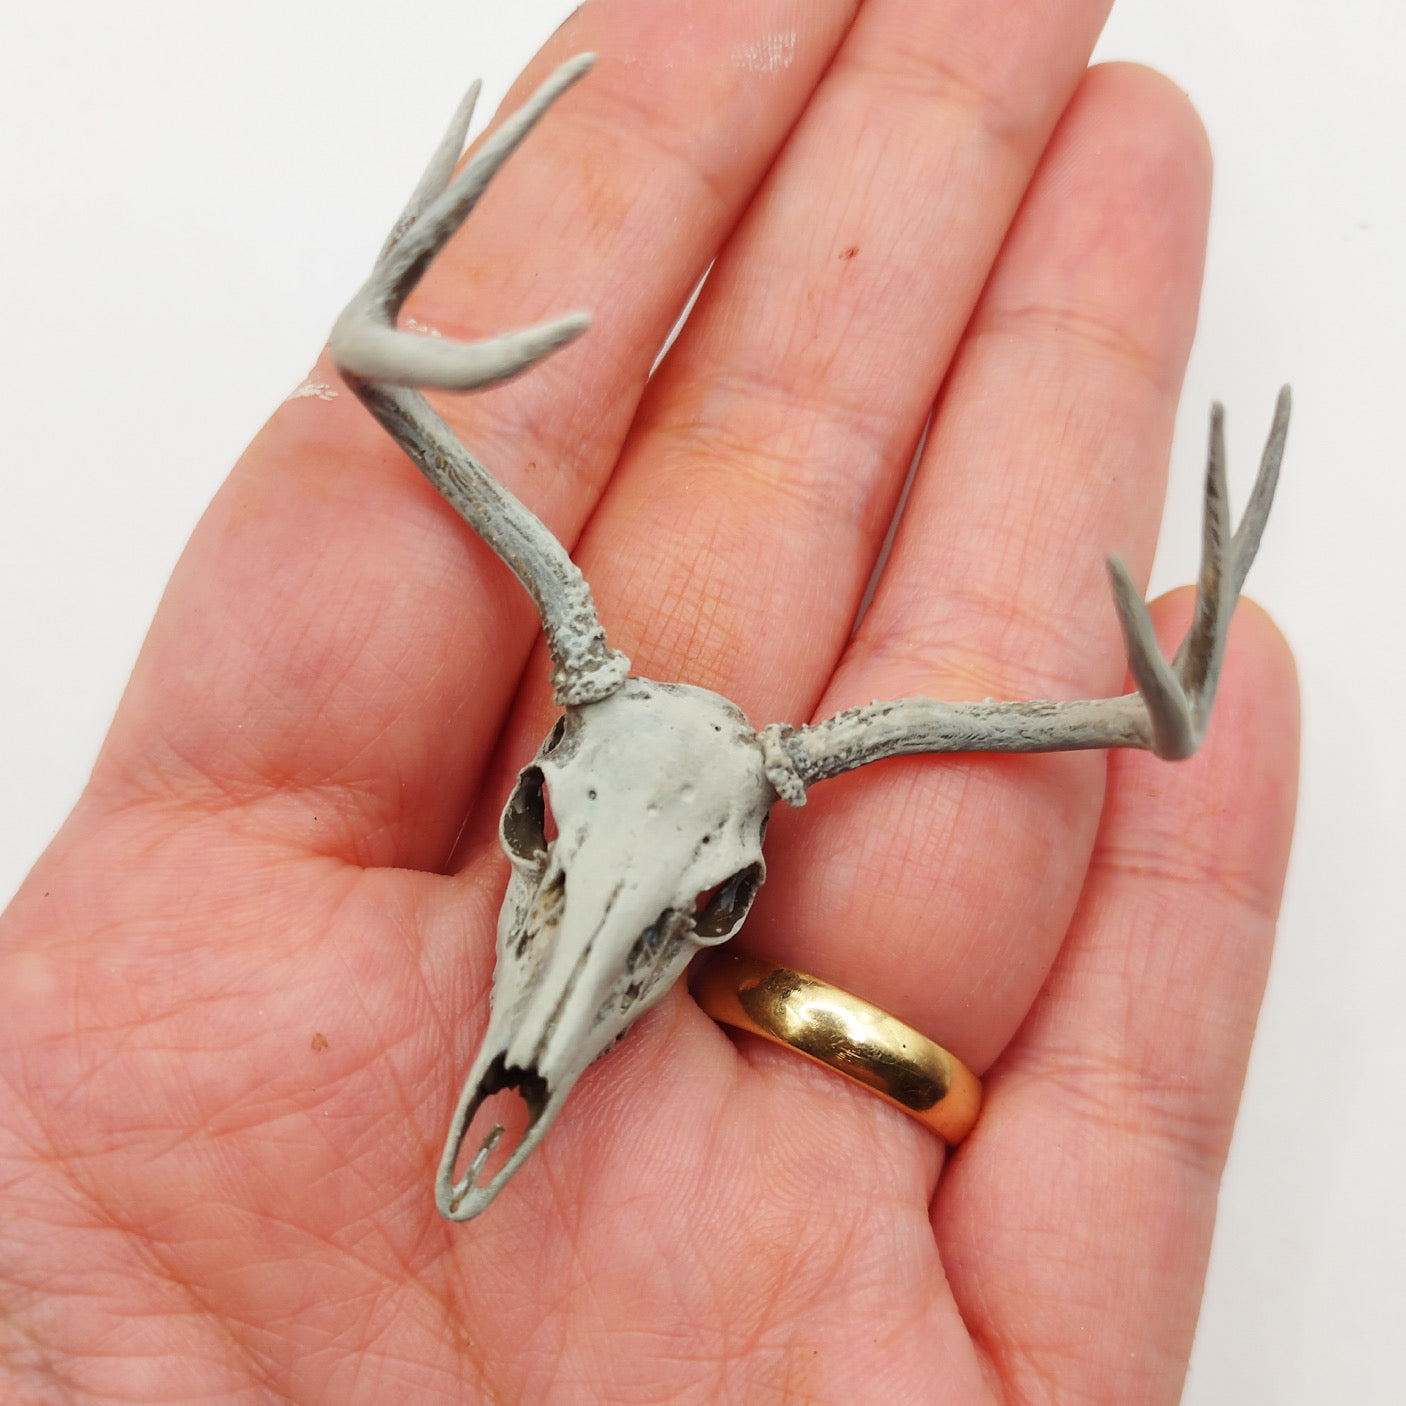 White Tailed Deer Miniature, 1:12 Scale Replica